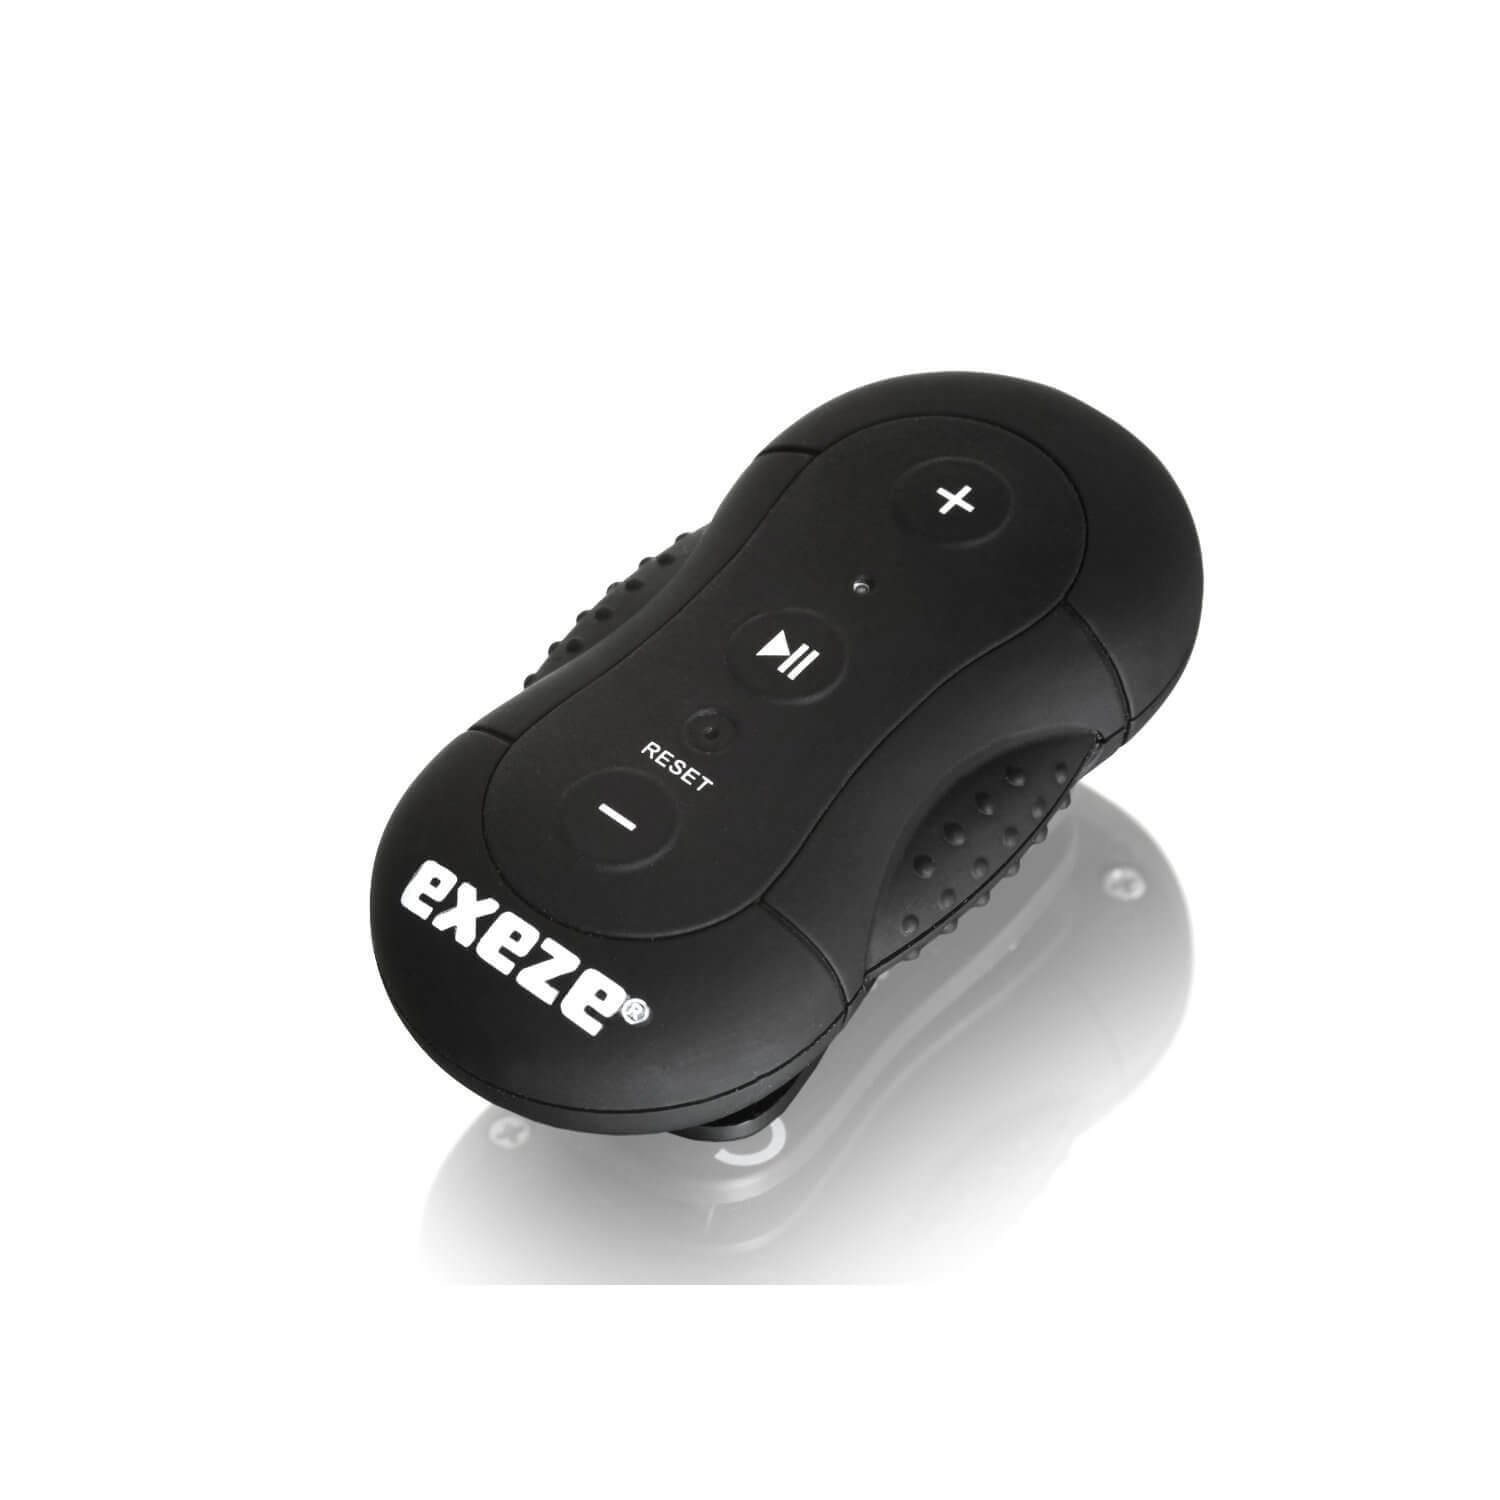 Exeze Rider Reproductor de MP3 resistente al agua